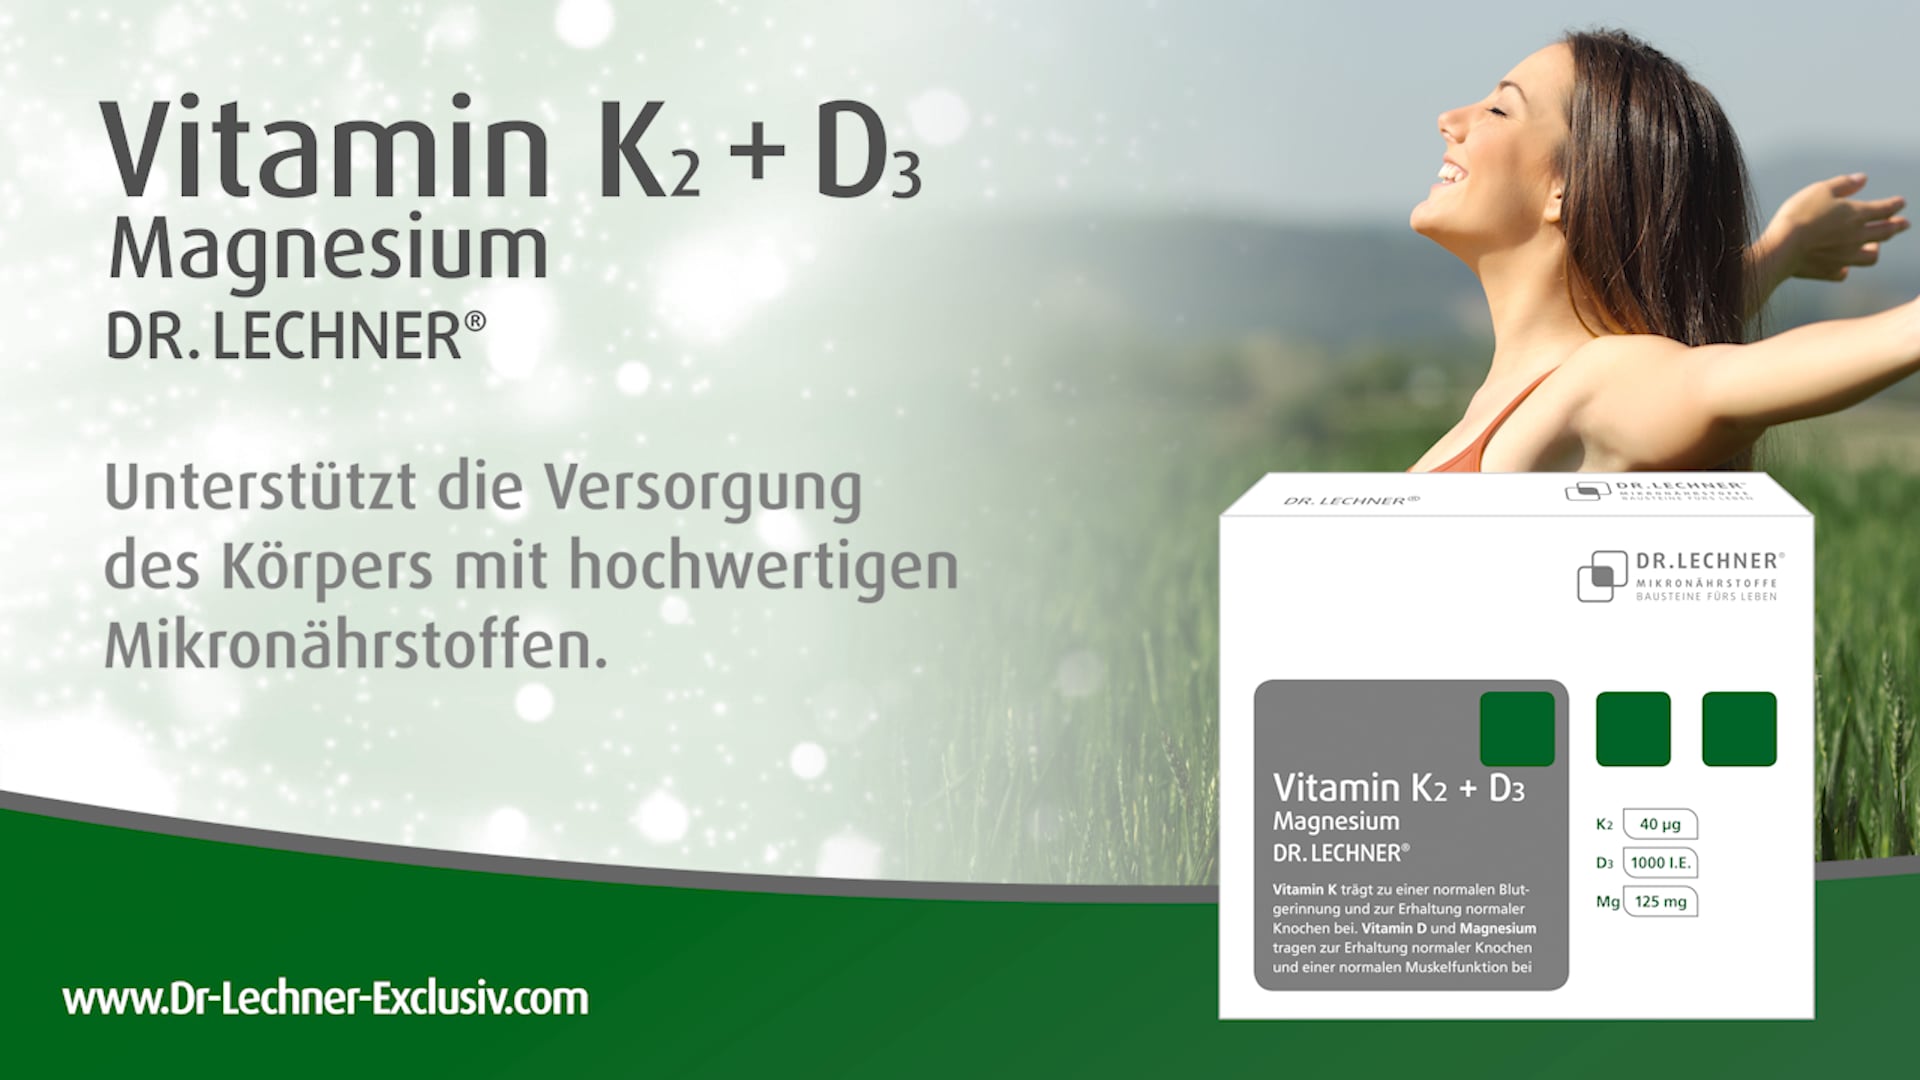 DR. LECHNER Vitamin K2 + D3 Magnesium Clip on Vimeo